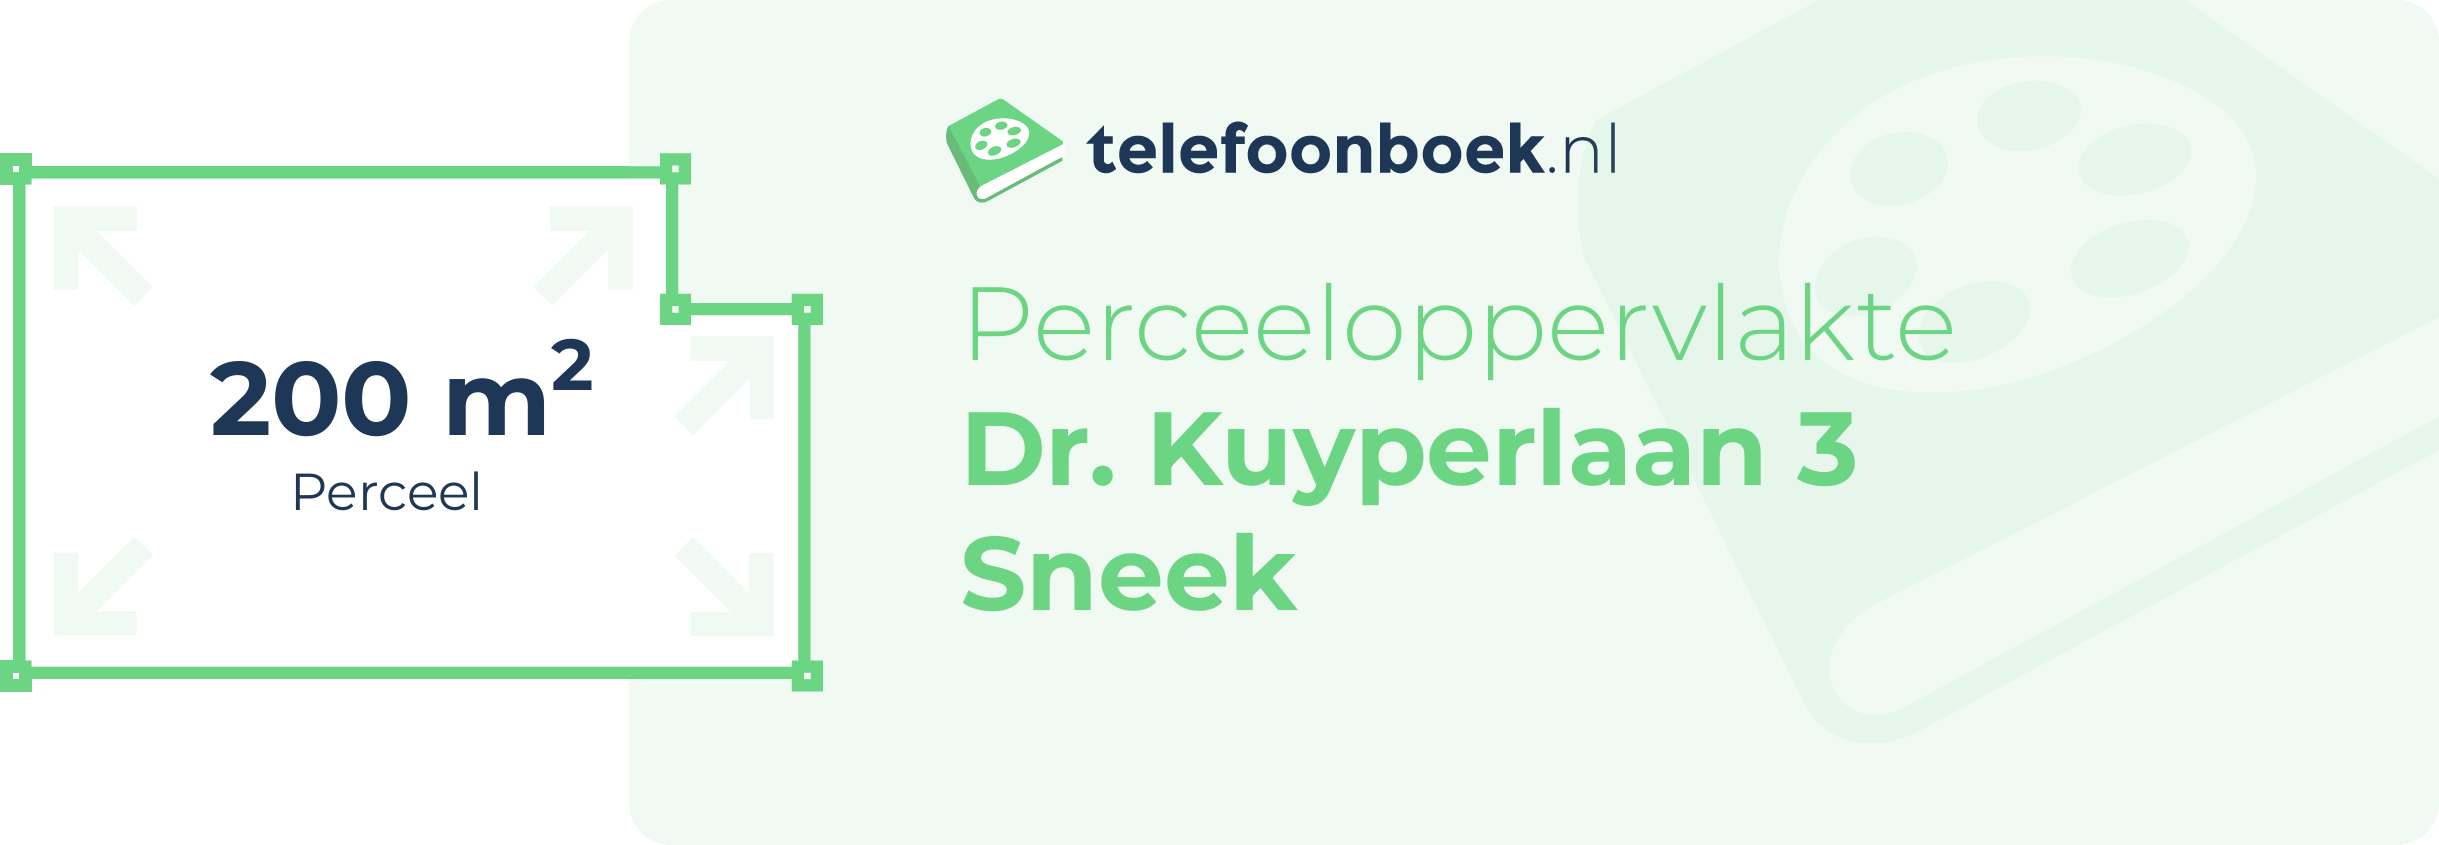 Perceeloppervlakte Dr. Kuyperlaan 3 Sneek